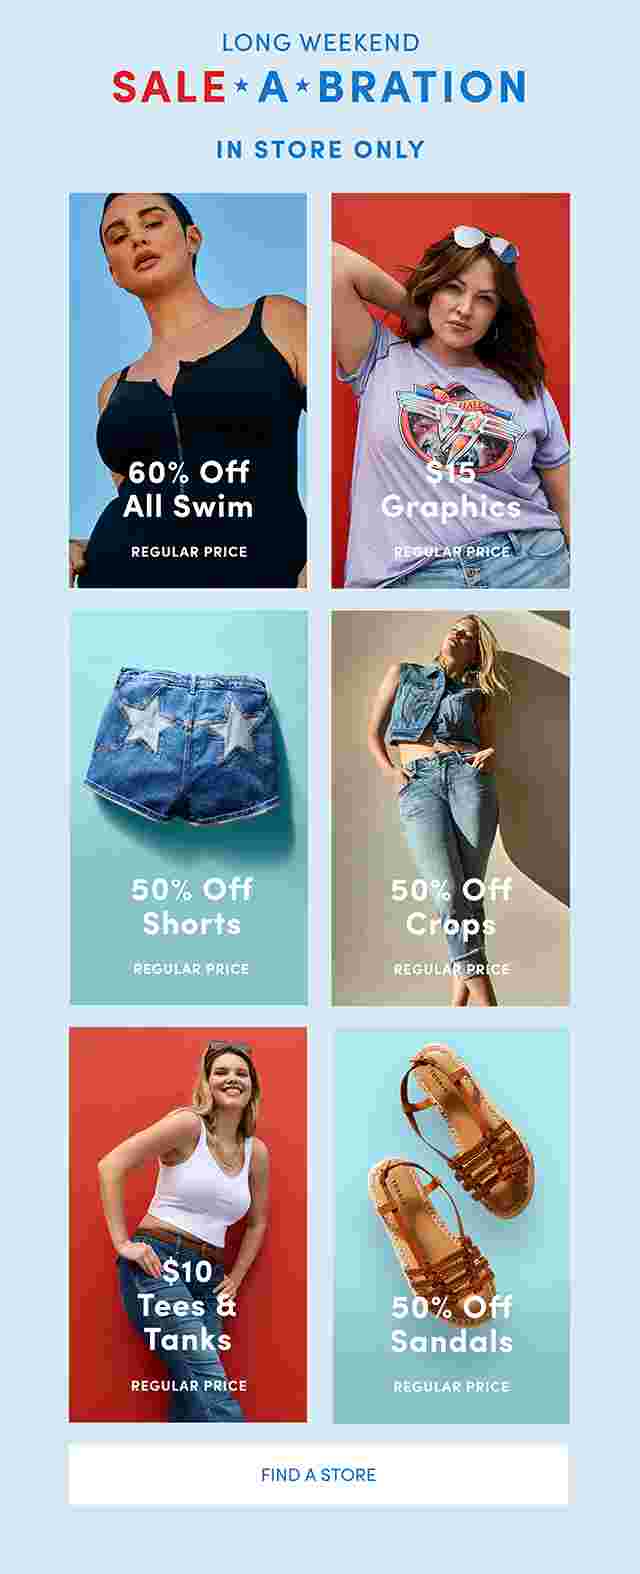 50% off all swim regular price